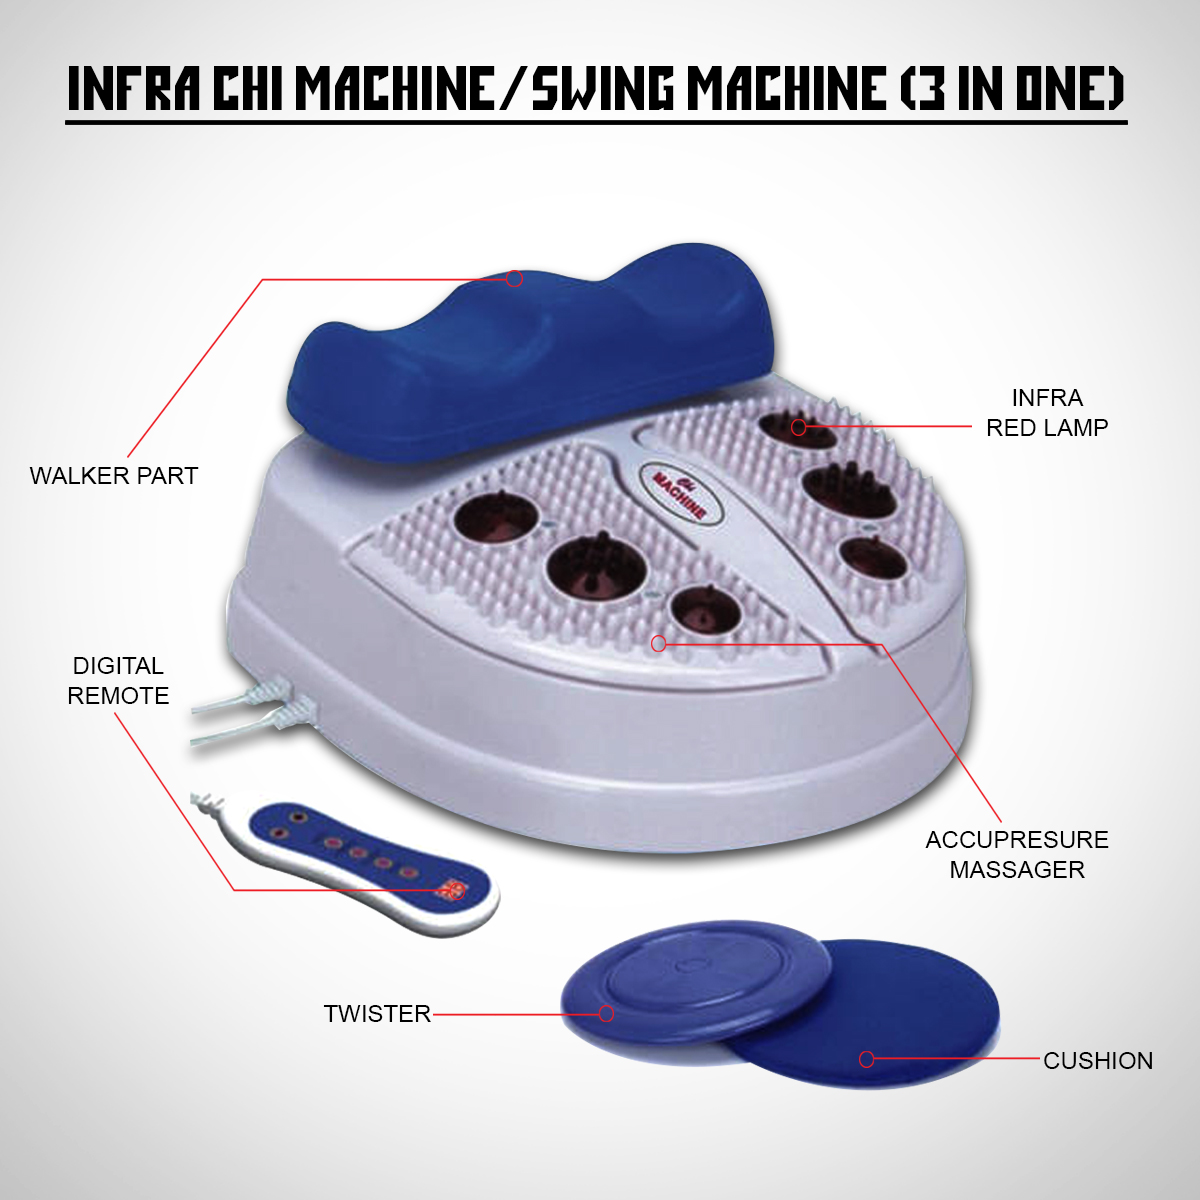 INFRA CHI MACHINE / SWING MACHINE (3 IN ONE)